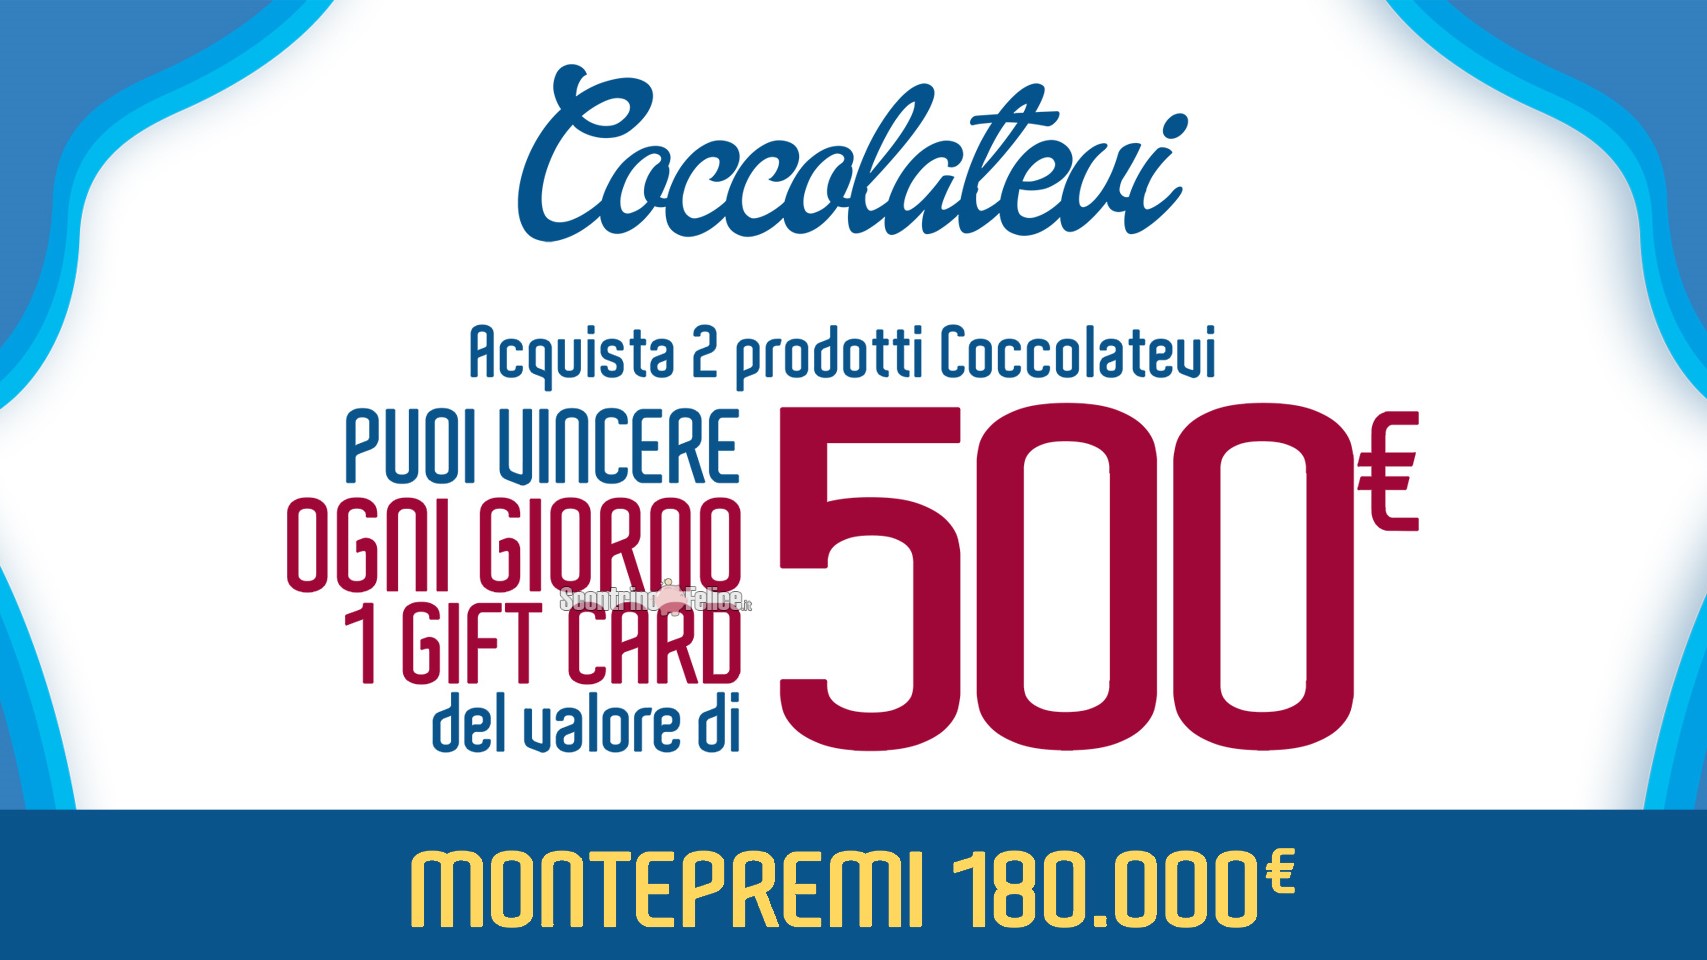 Concorso Coccolatevi 2023 vinci 360 gift card da 500 euro